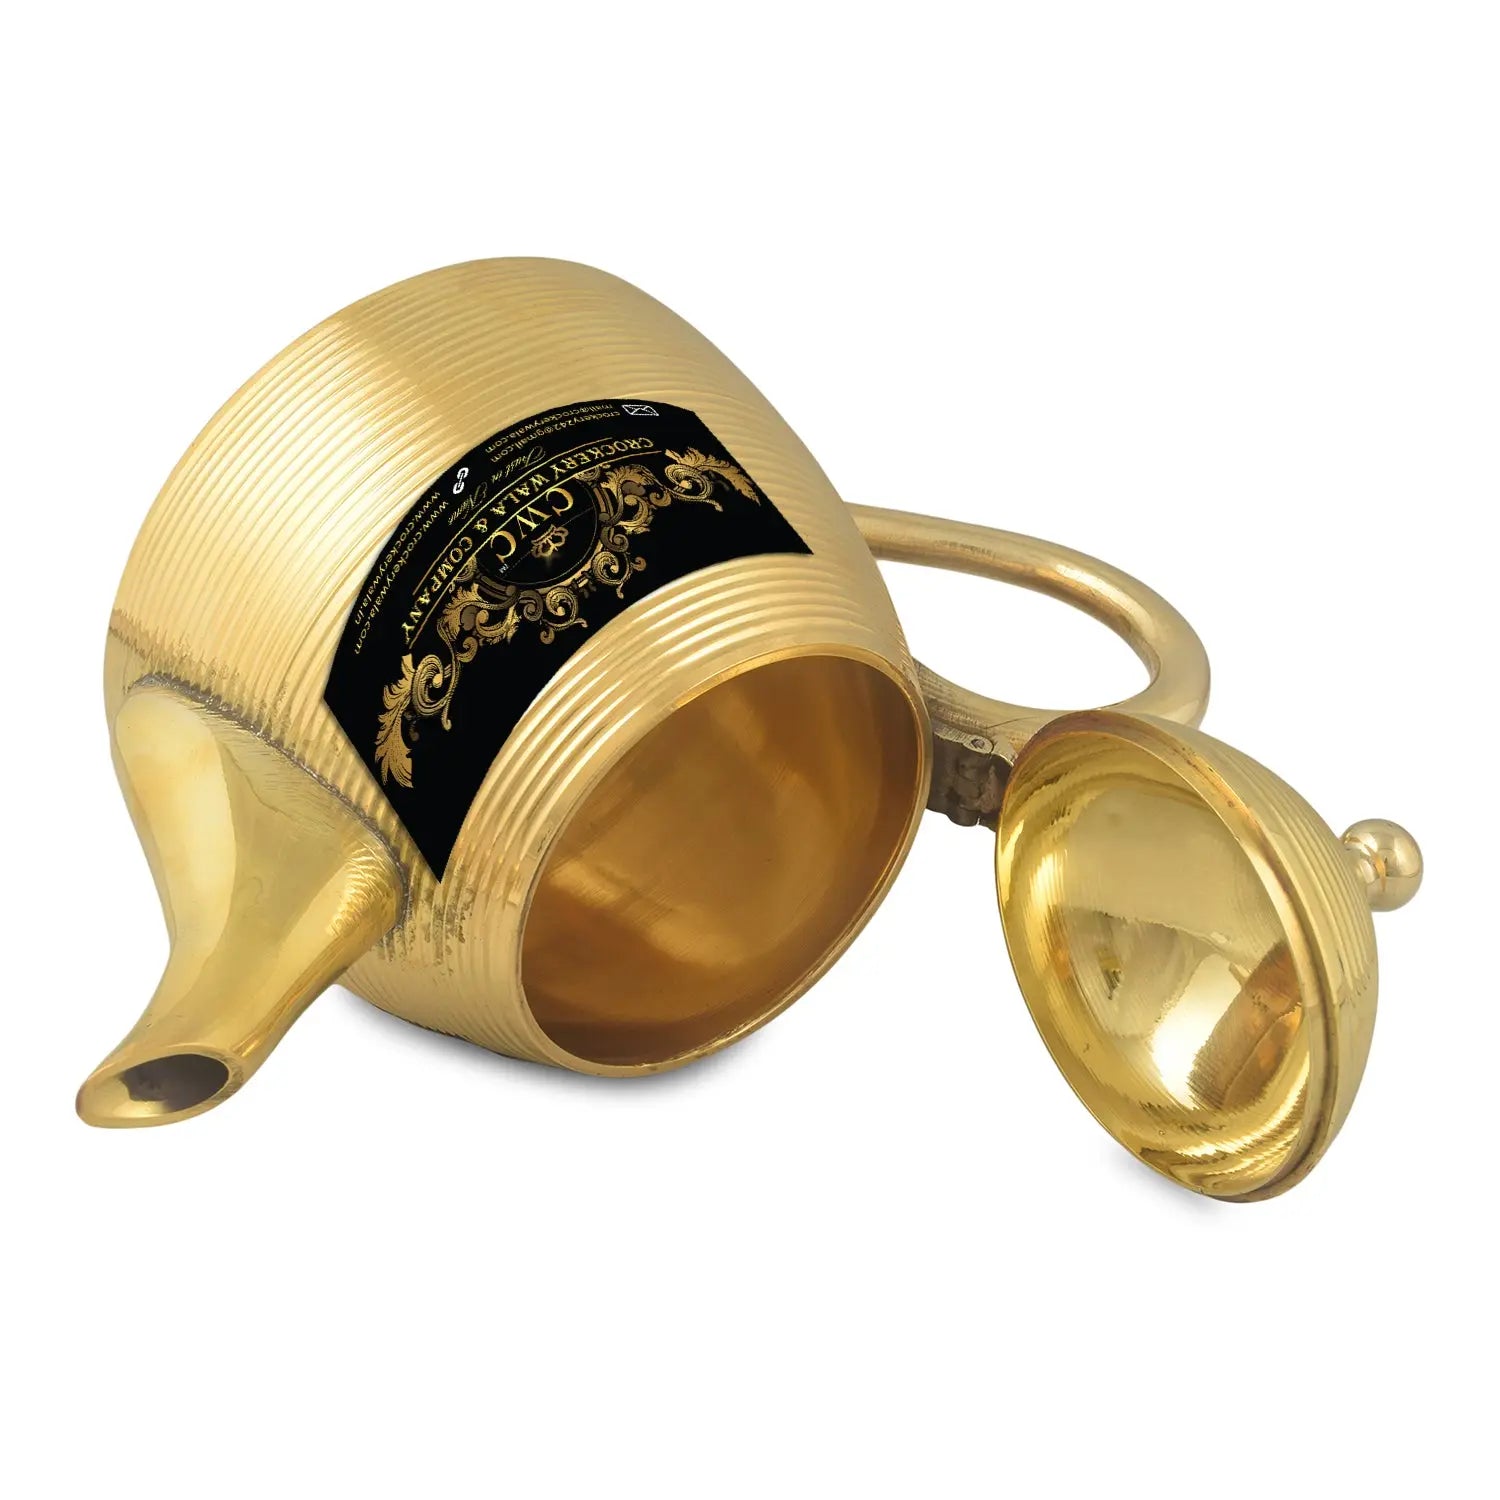 Brass Designer Kettle For Tea Lining Design - CROCKERY WALA AND COMPANY 